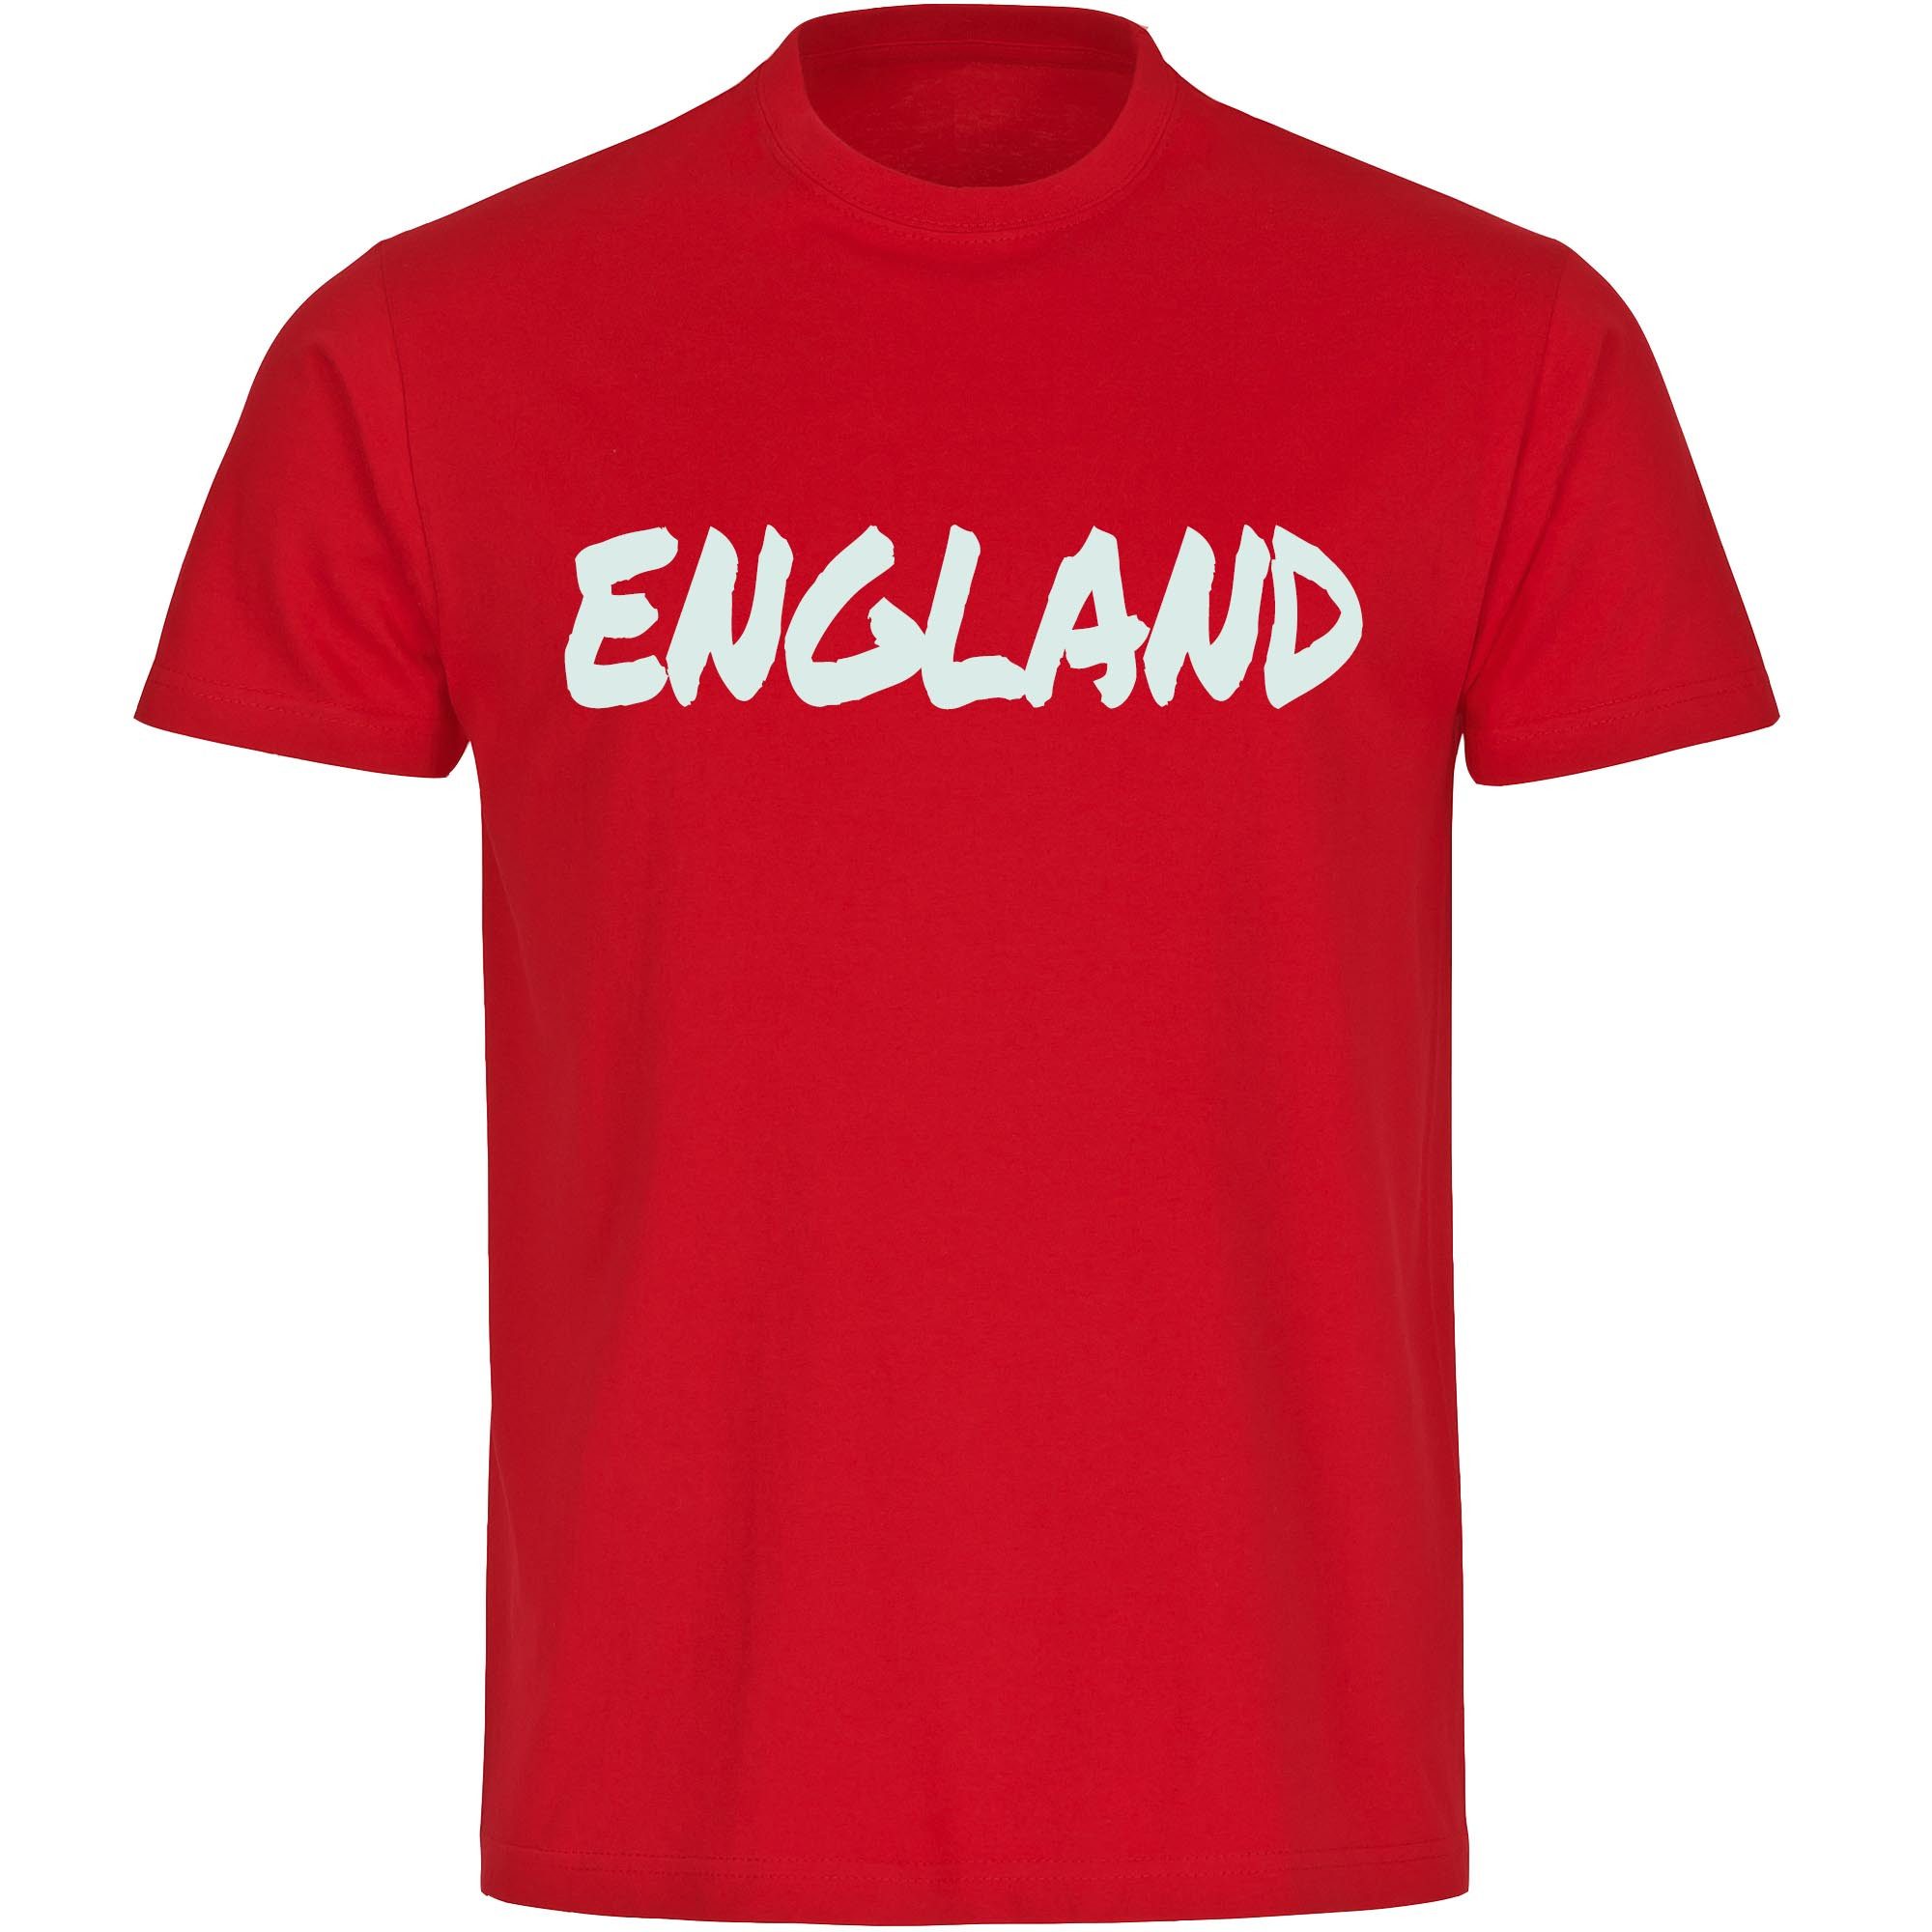 multifanshop T-Shirt Kinder England - Textmarker - Boy Girl